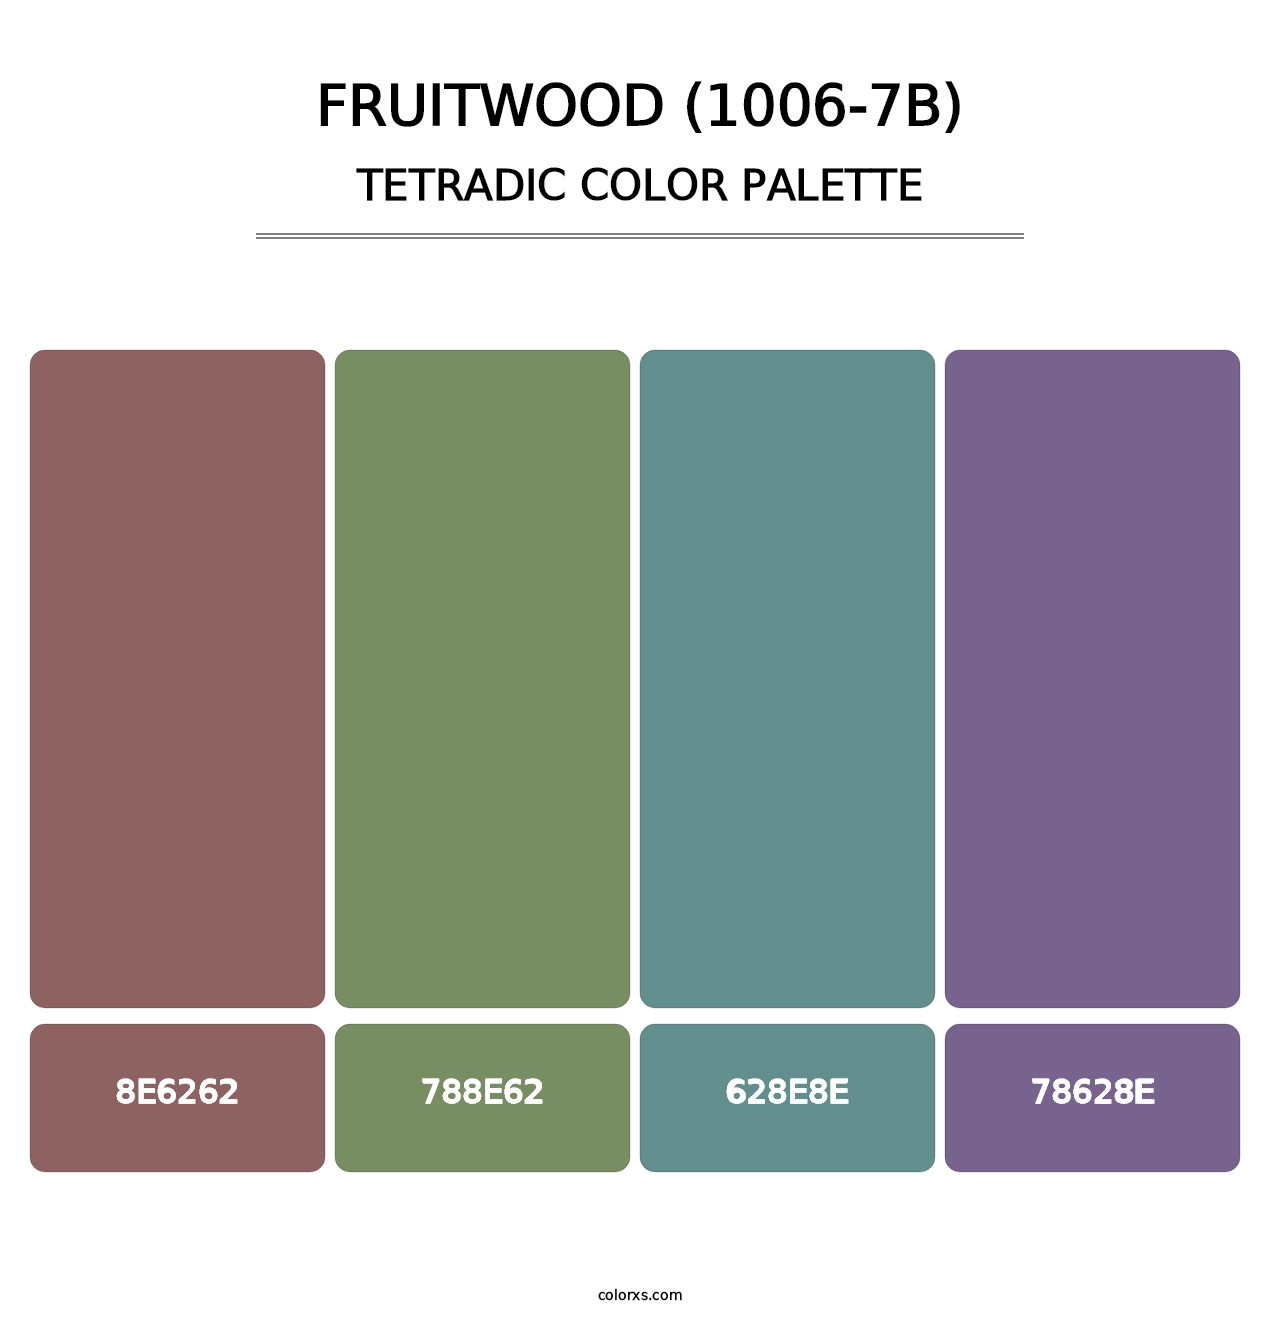 Fruitwood (1006-7B) - Tetradic Color Palette